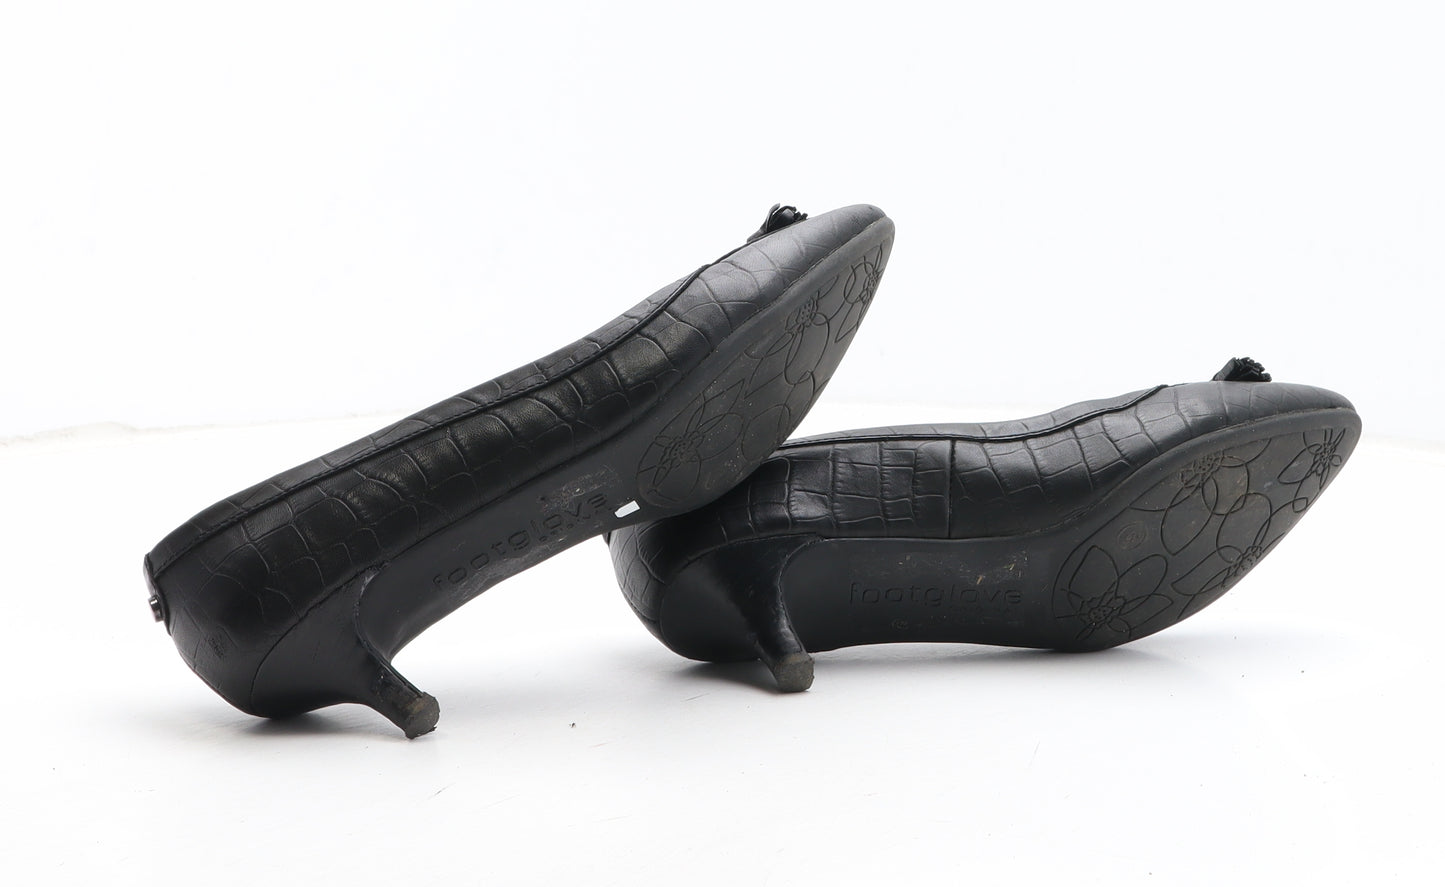 FootGlove Womens Black Synthetic Court Heel UK - Croc Texture